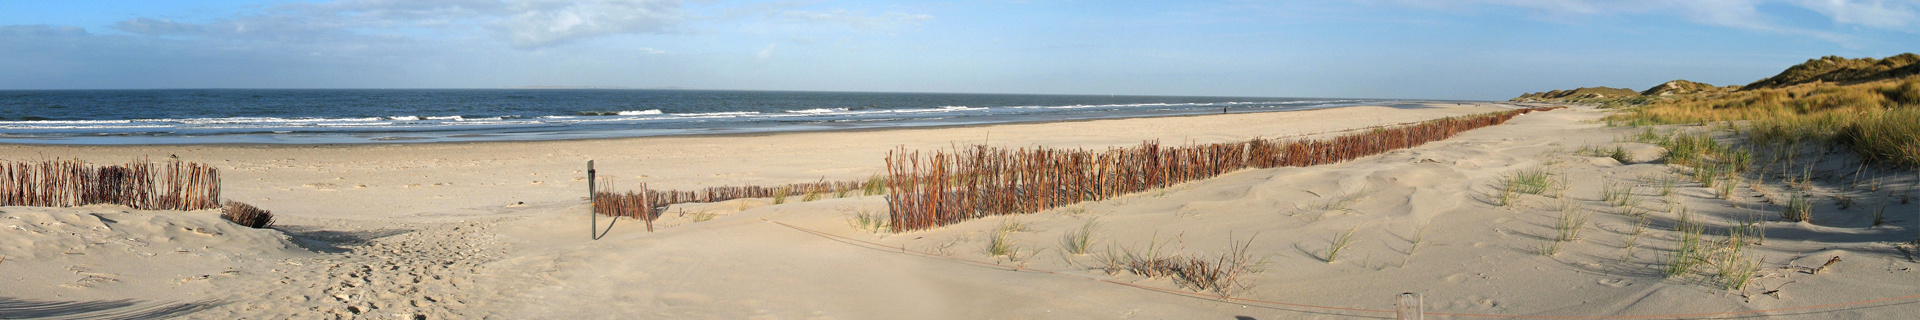 Panorama strand herstel Callantsoog